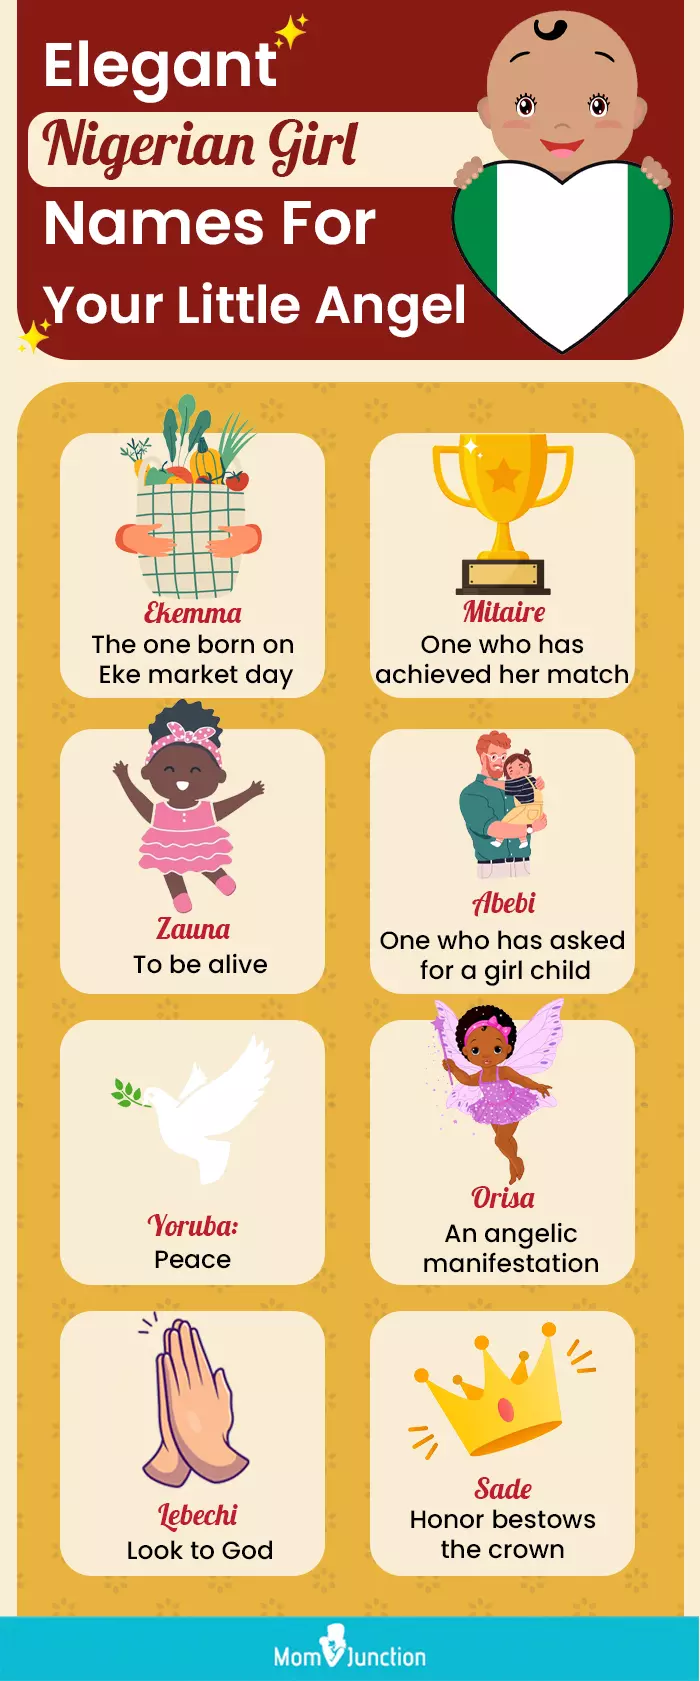 elegant nigerian girl names for your little angel (infographic)